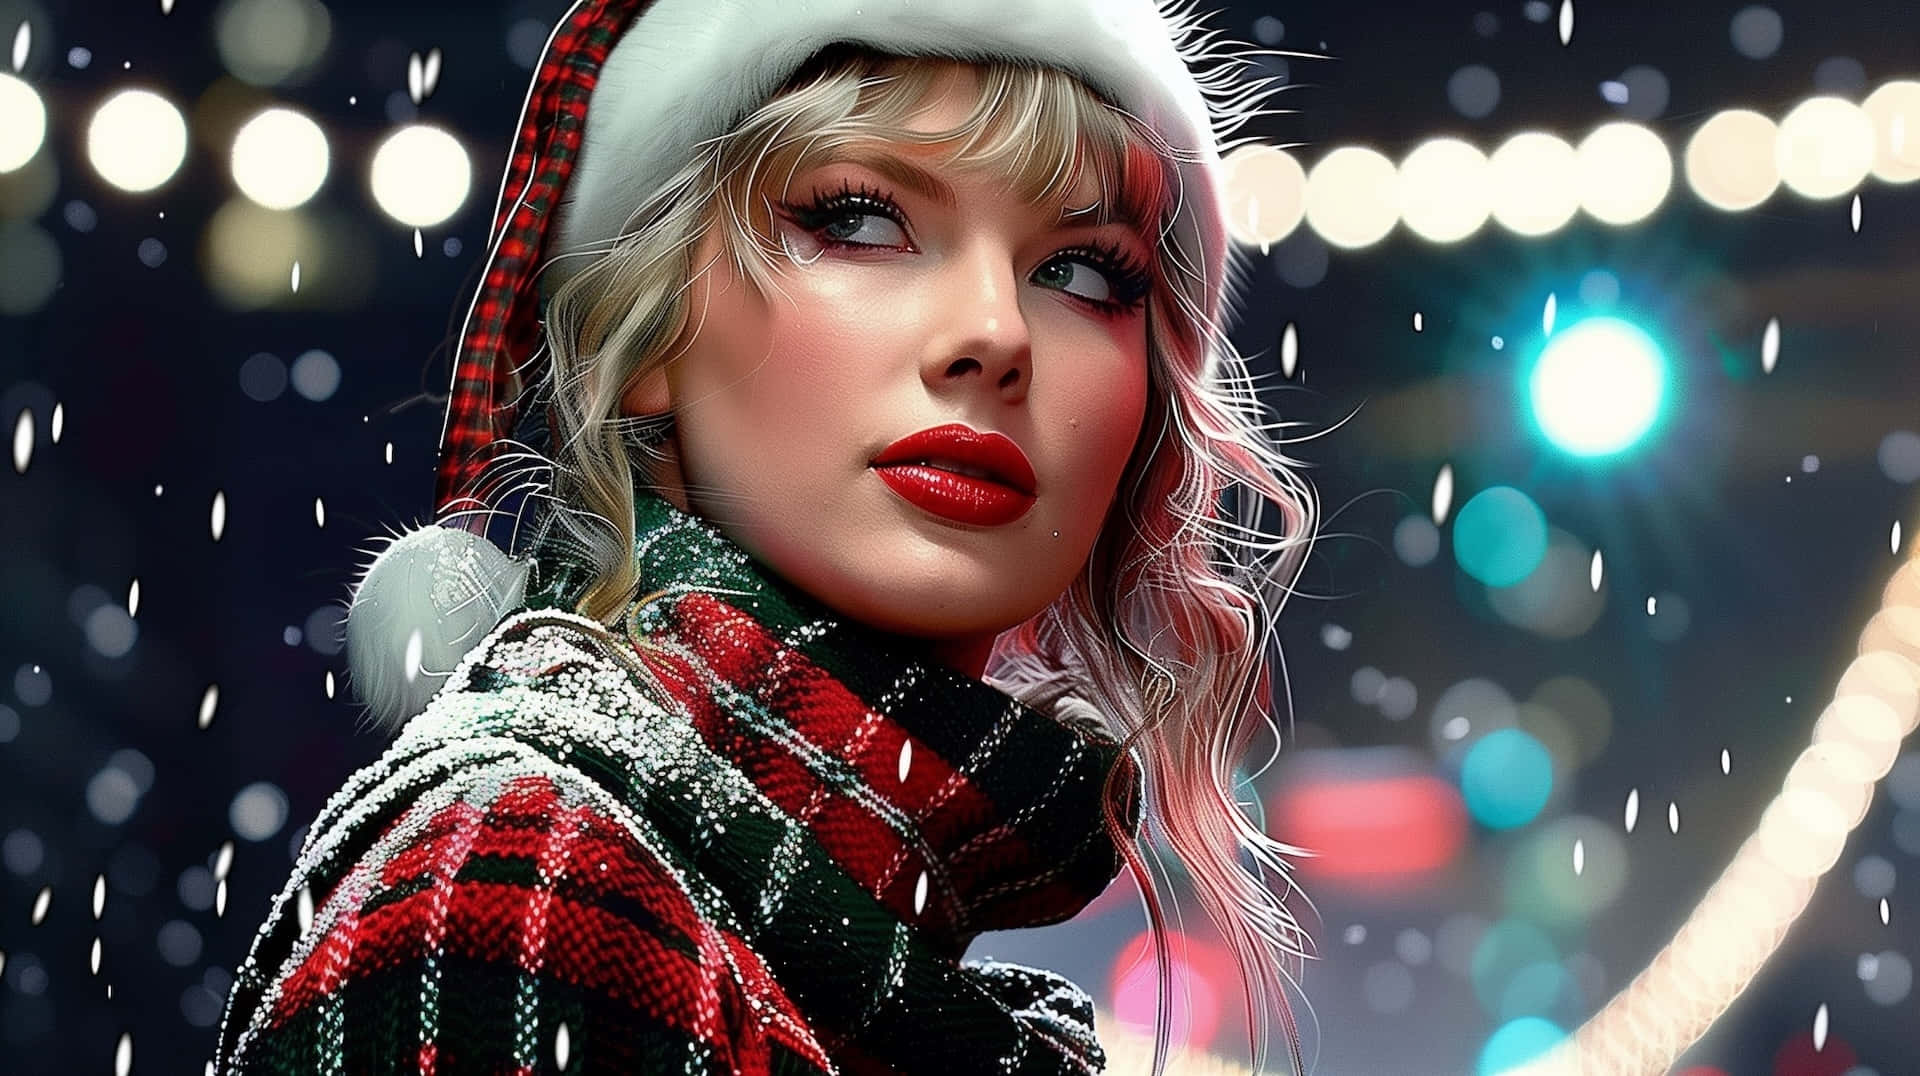 Christmas Winter Fashion Portrait Wallpaper